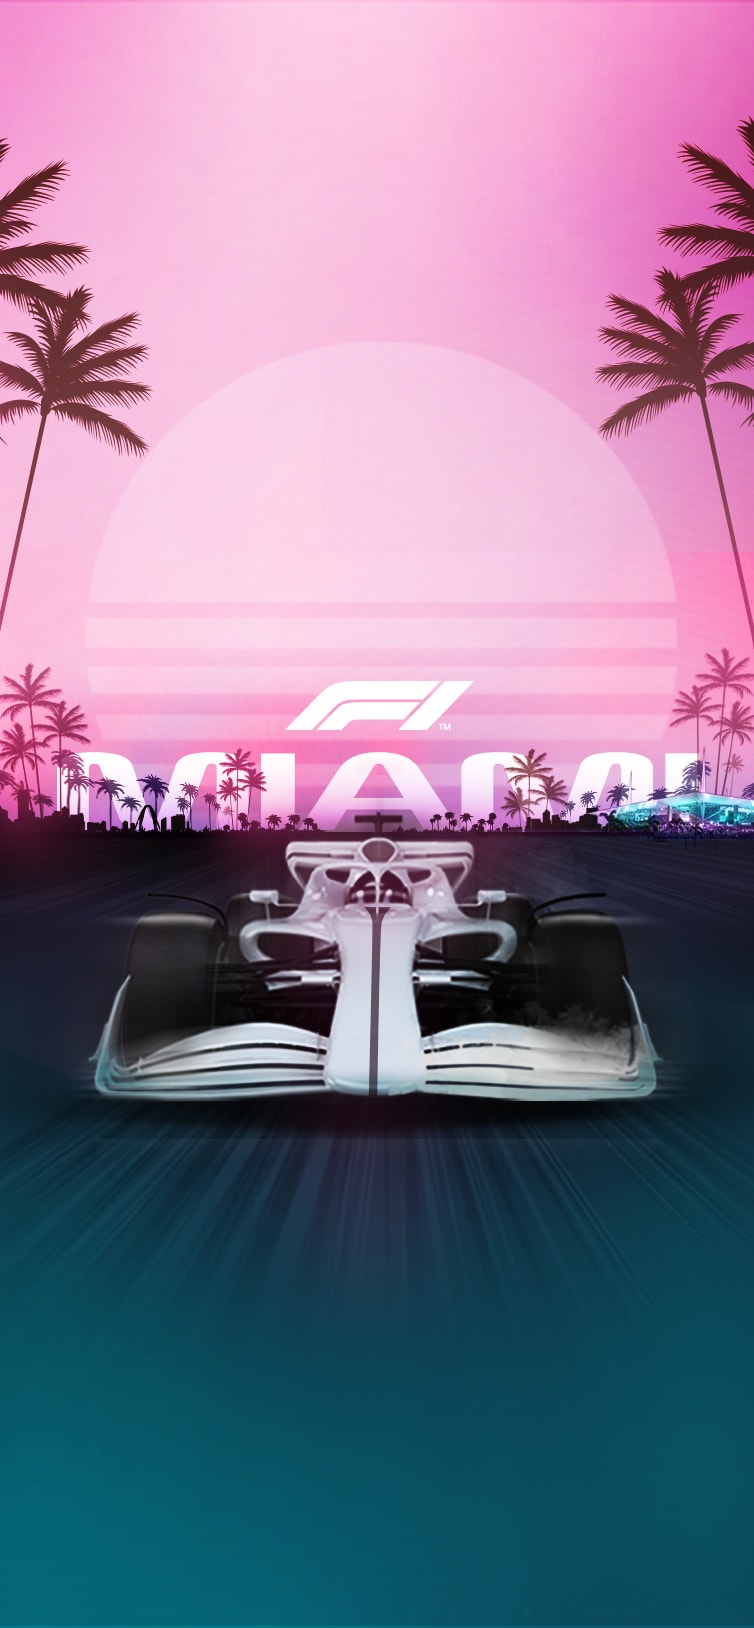 Mark Miami's first Grand Prix with a downloadable wallpaper | Formula 1®